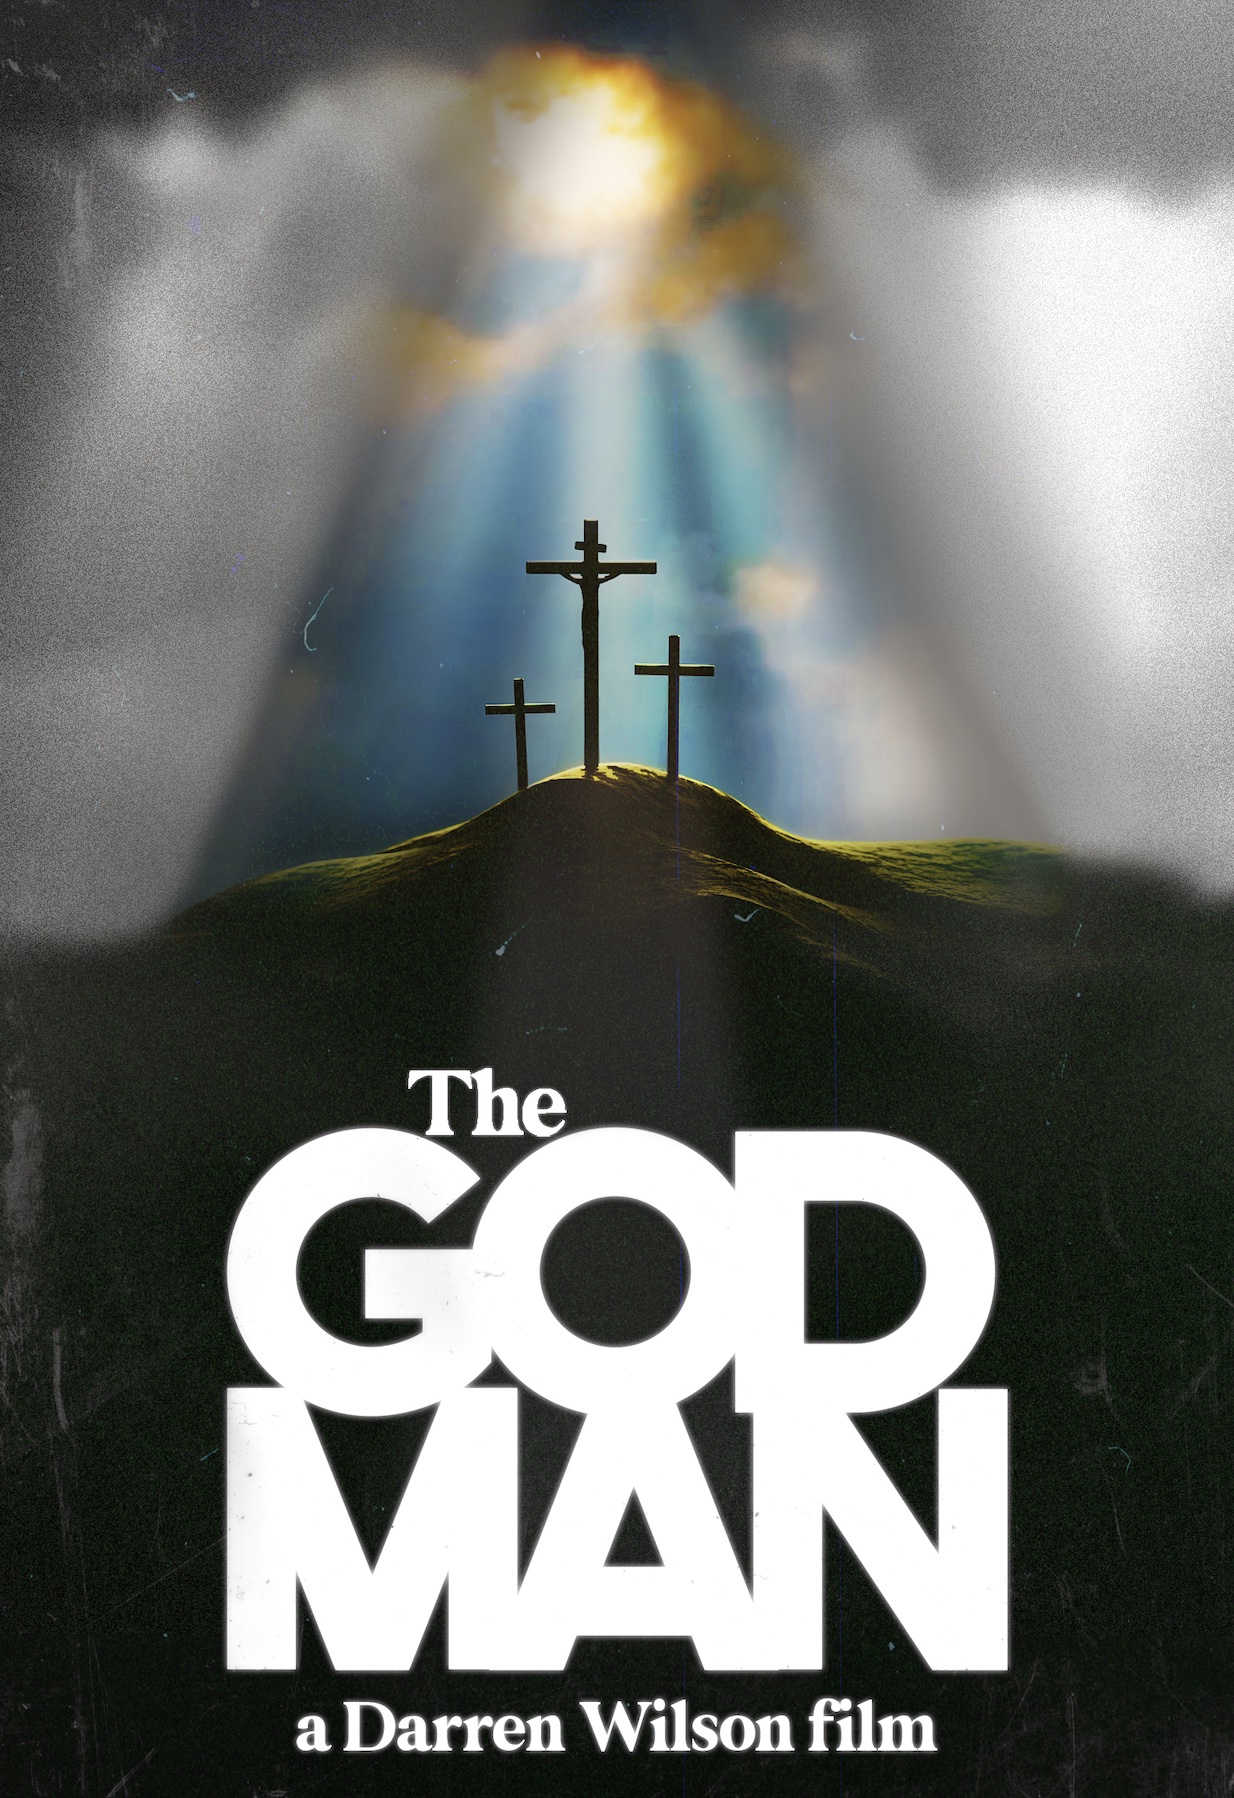 THE GOD MAN